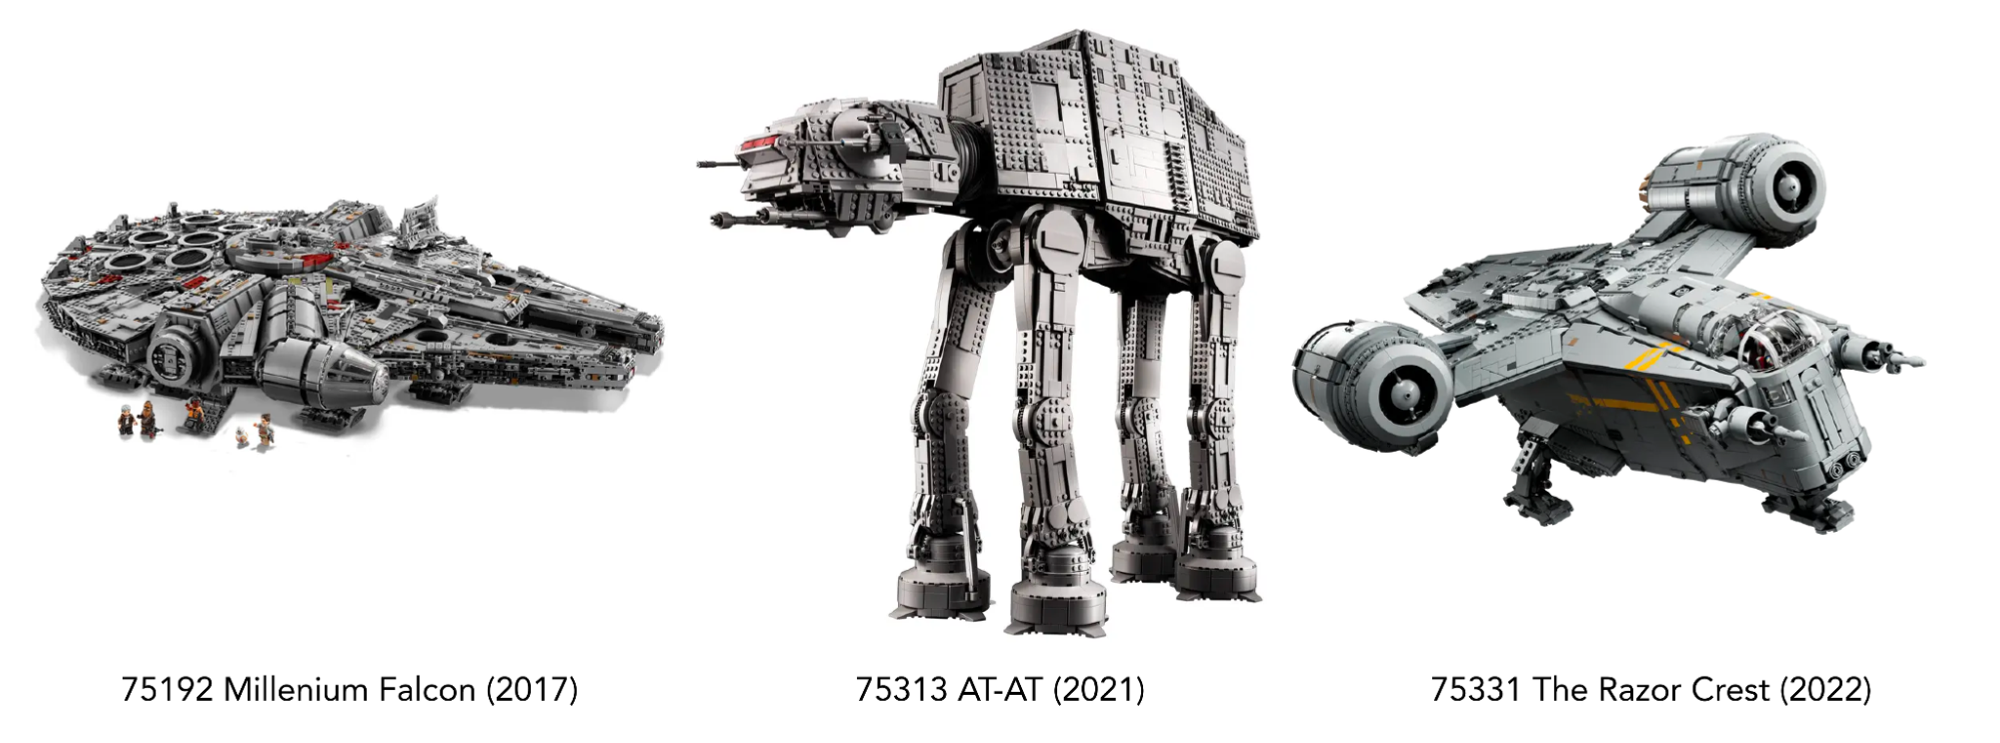 The three largest Star Wars™ sets.